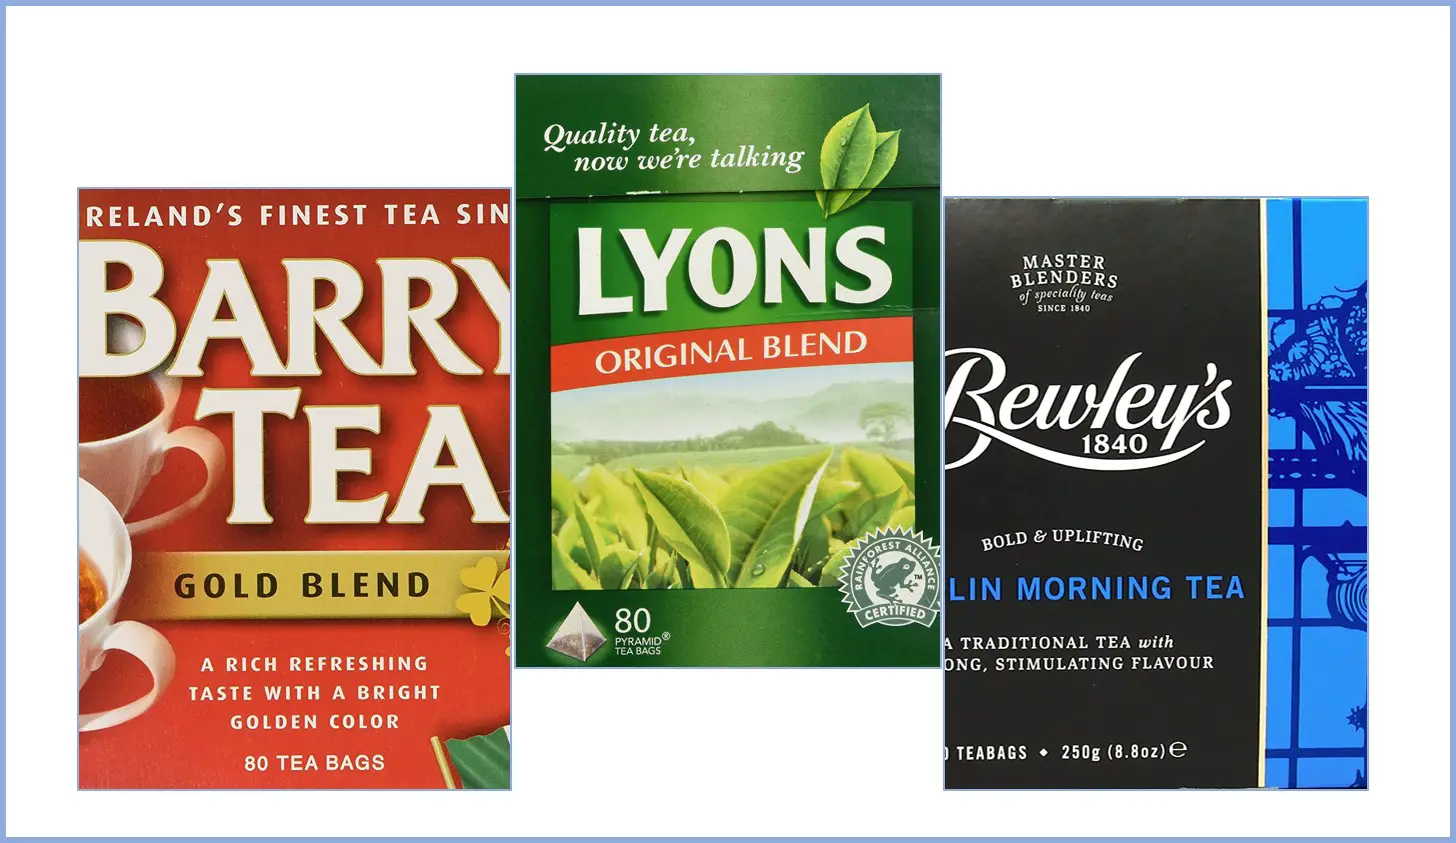 Barry's Lyons and Bewleys teas